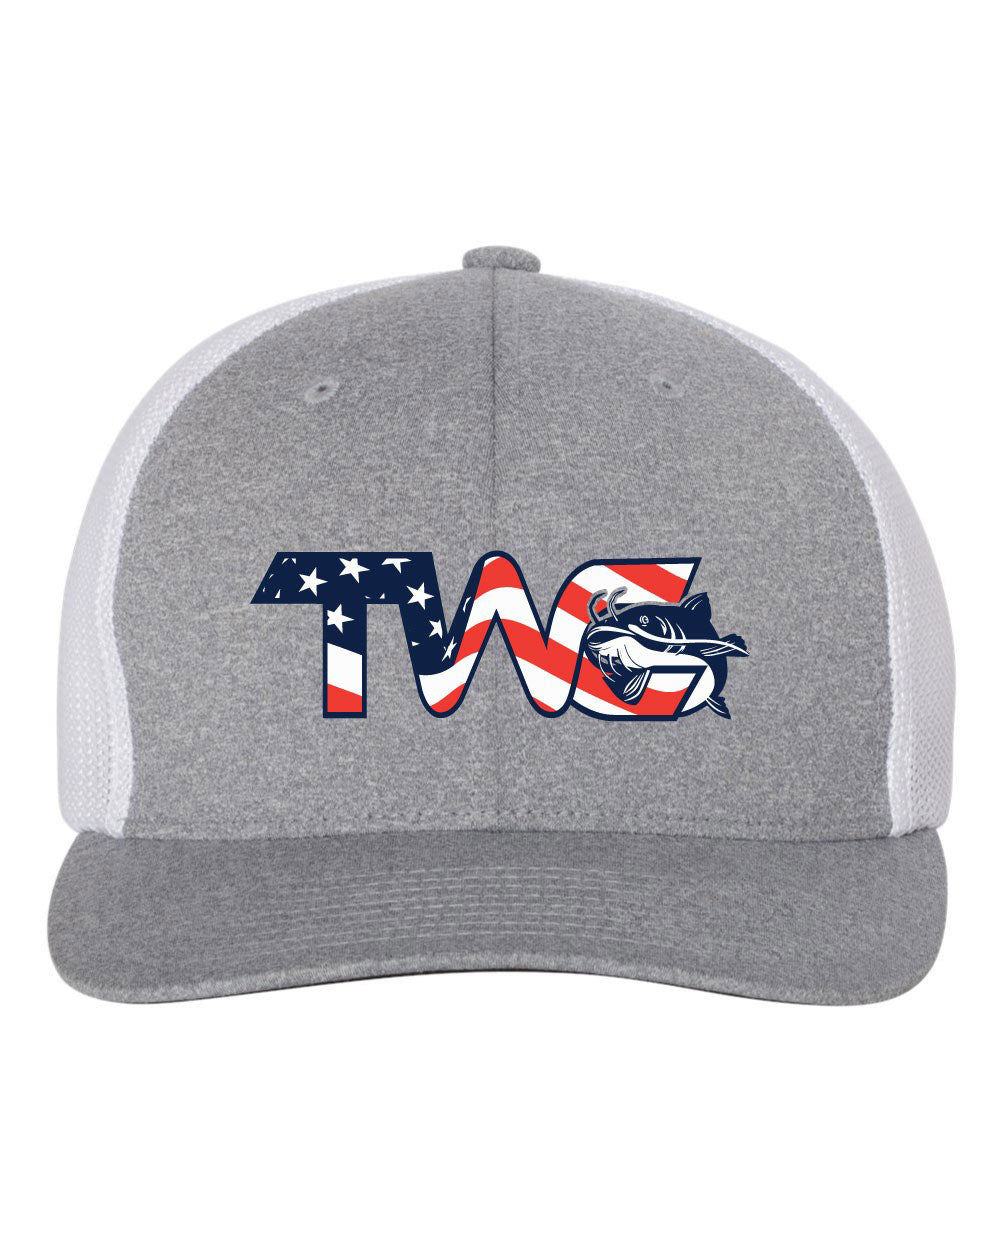 Flex Fit Gray/White/American Flag Hat